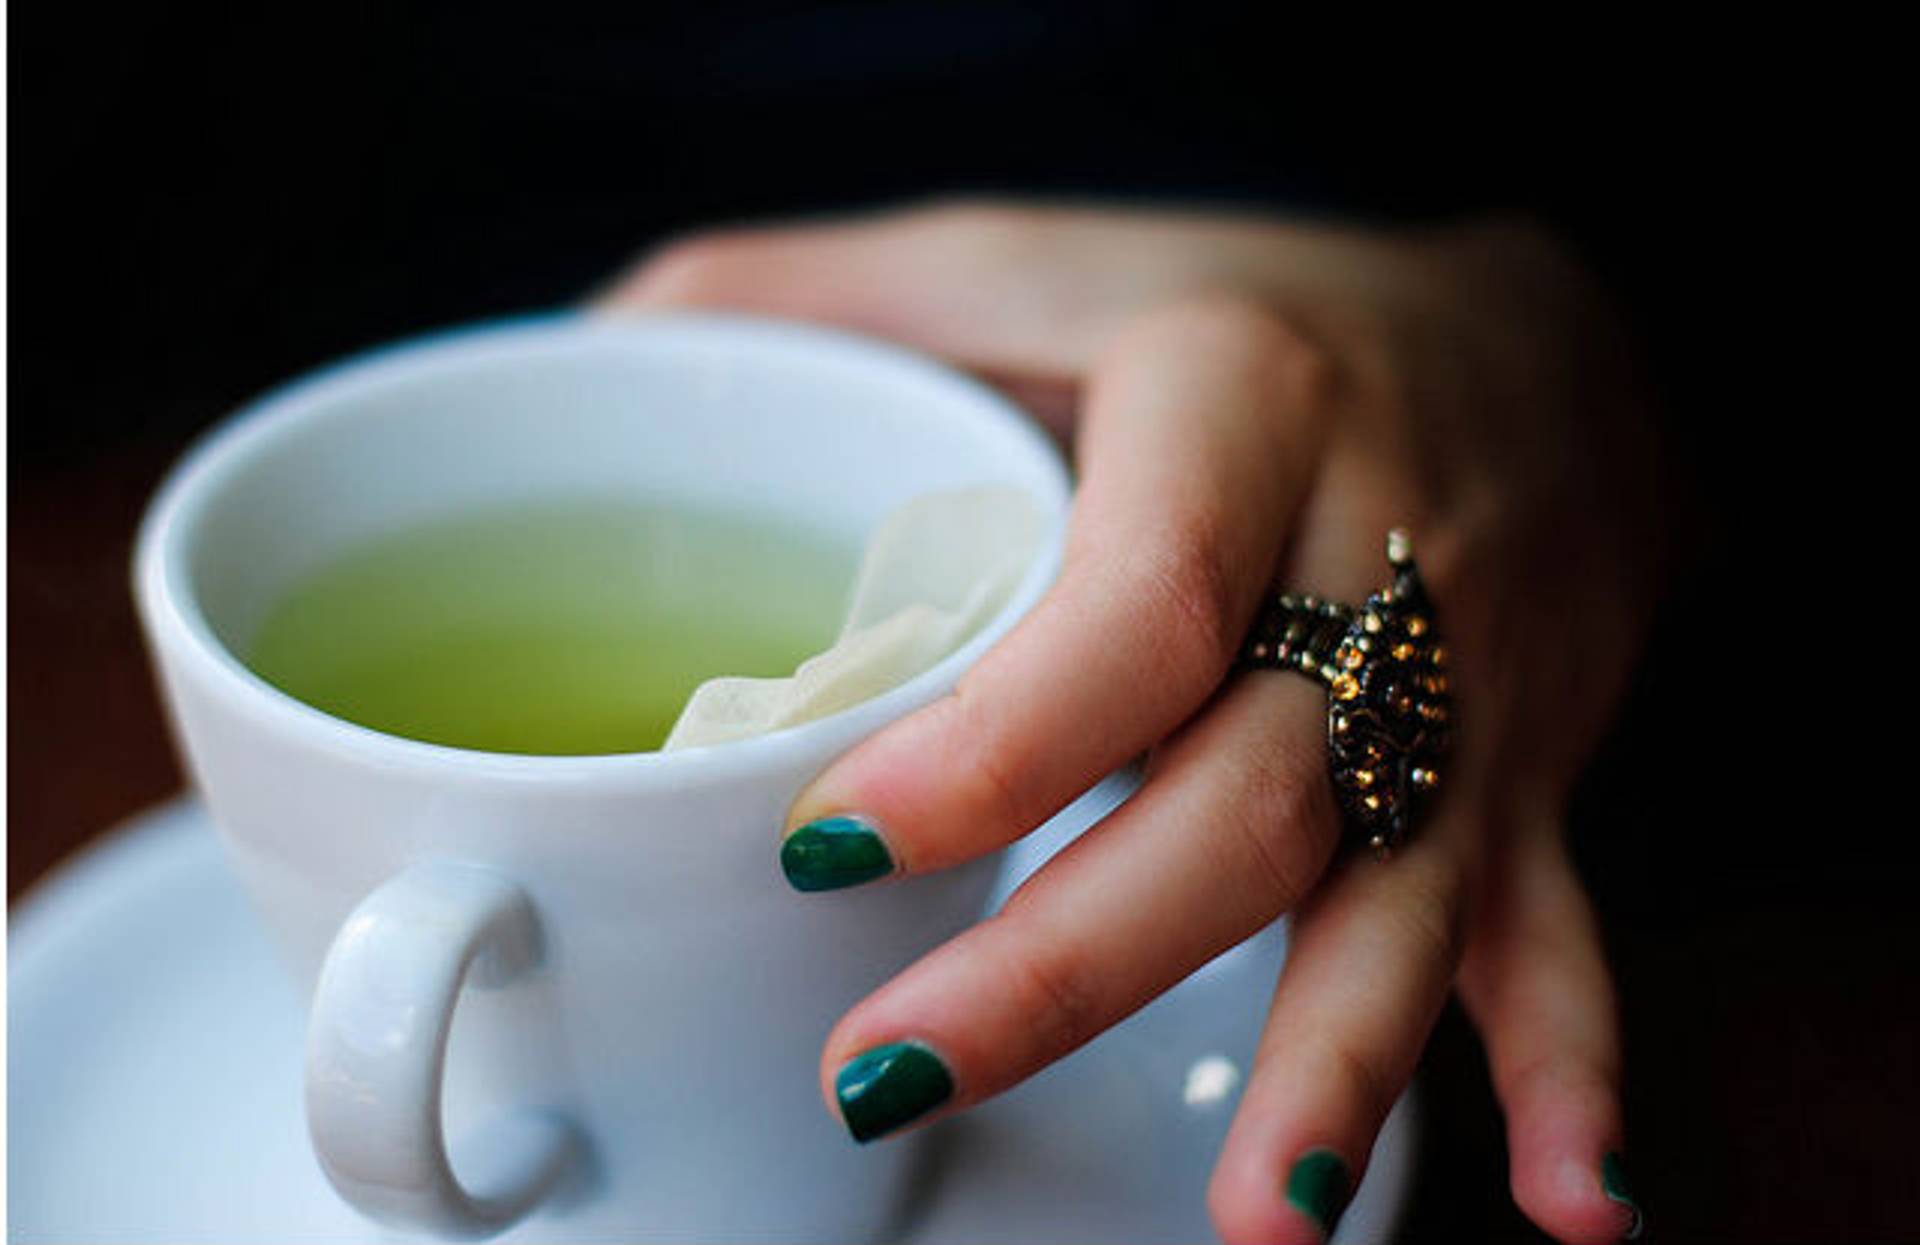 Health-conscious Indians drink green tea